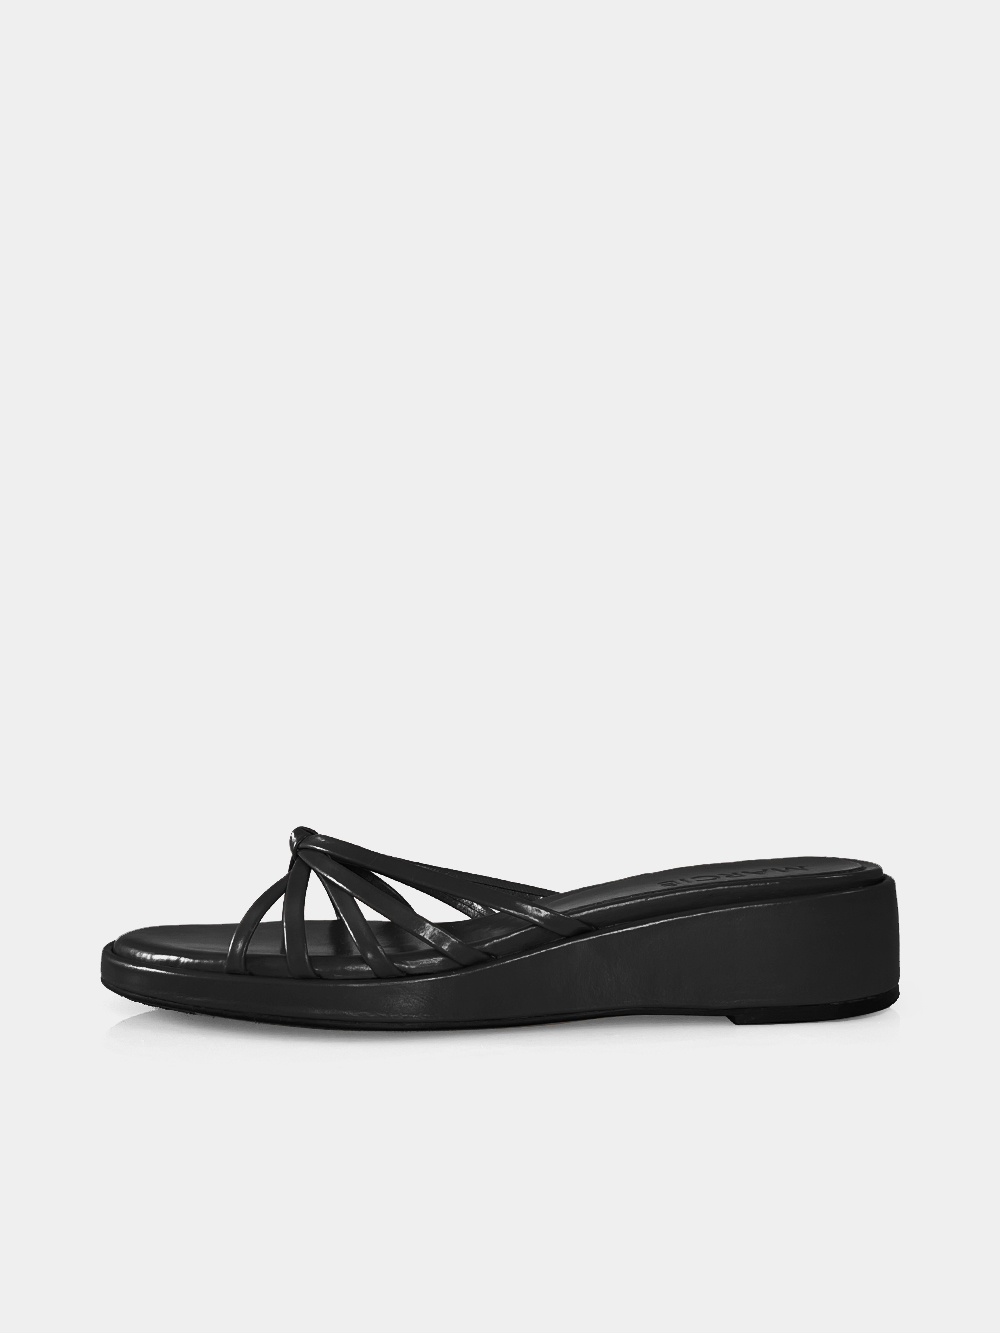 [Out of stock] Mrc105 Strap Platform Sandal (Black)